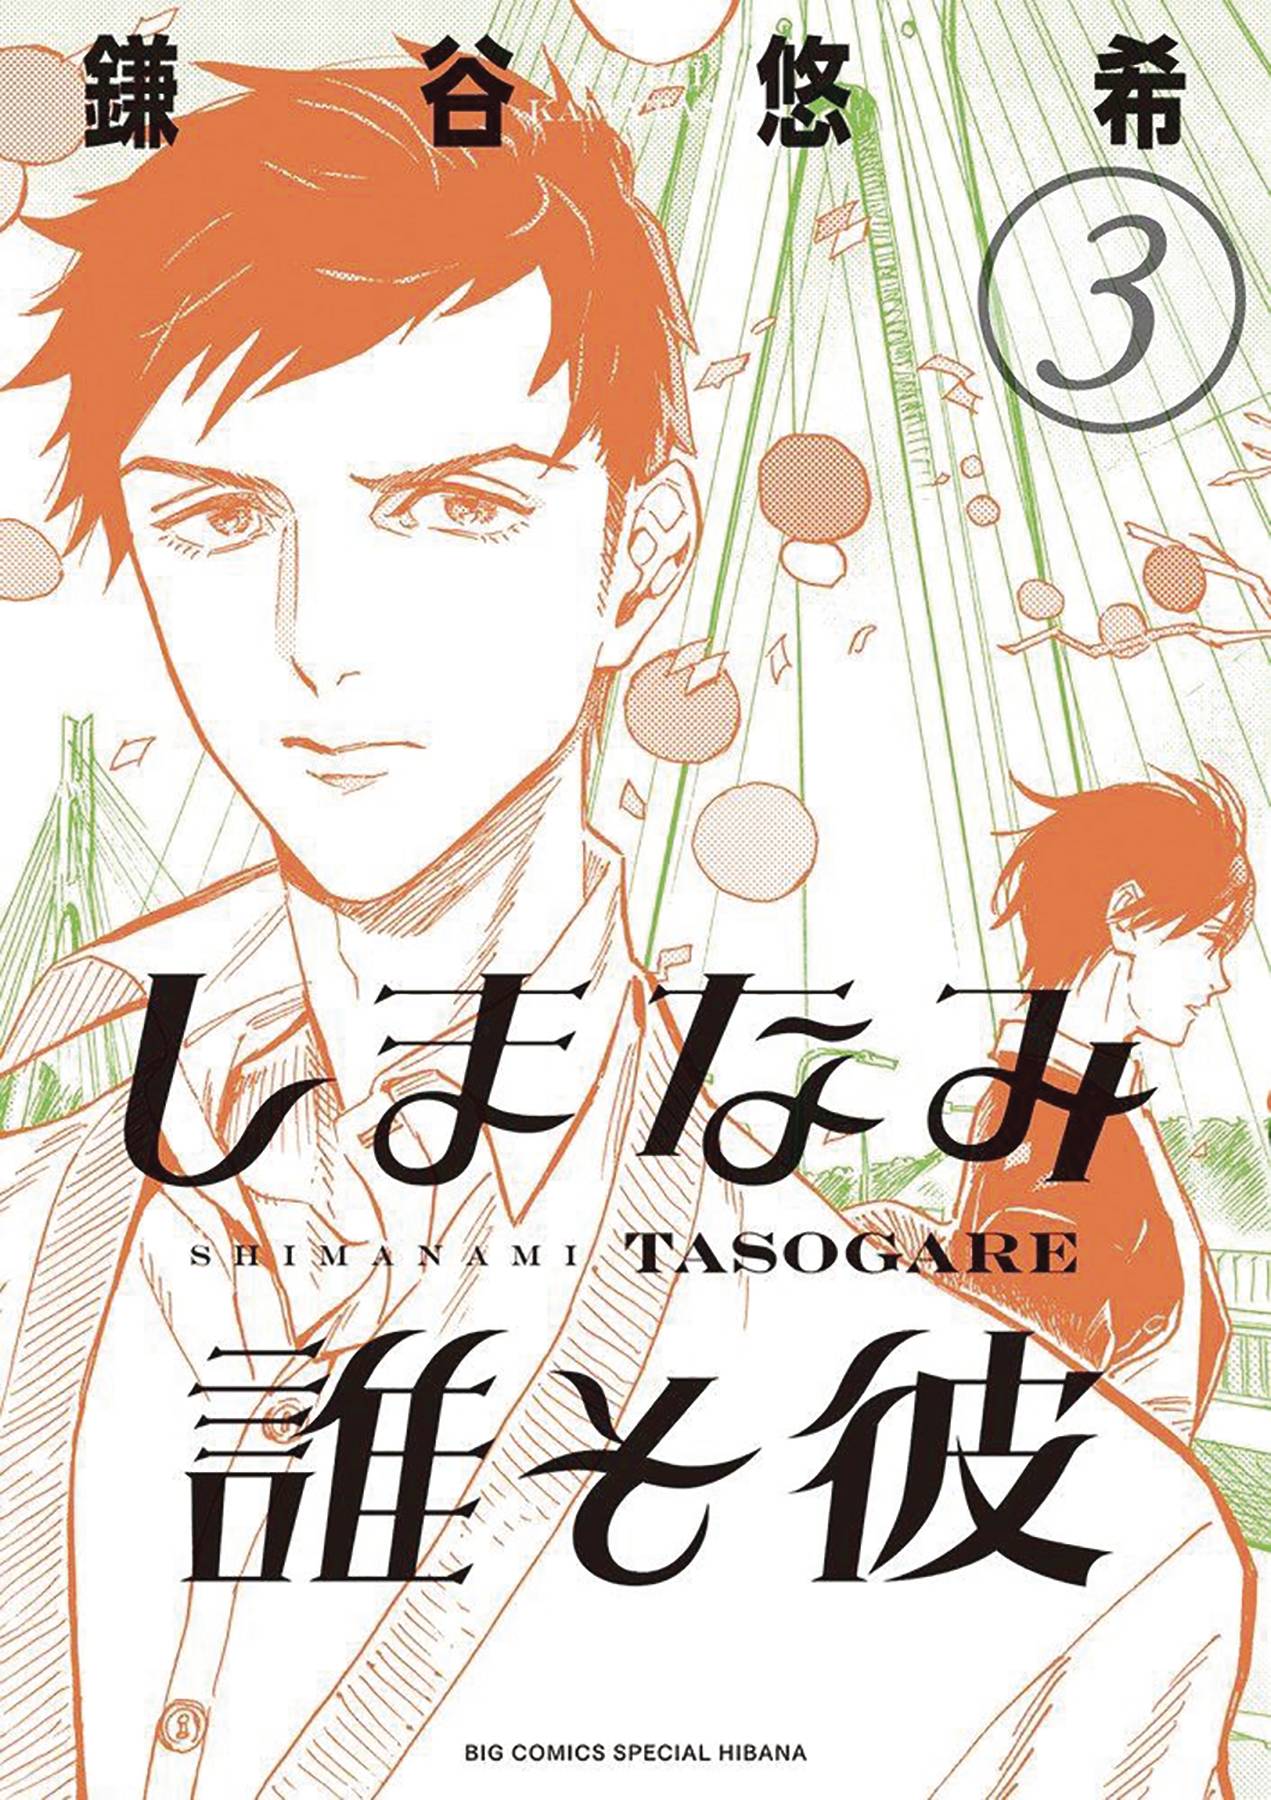 Our Dreams At Dusk Shimanami Tasogare Manga Volume 3 (Mature) (Of 4)